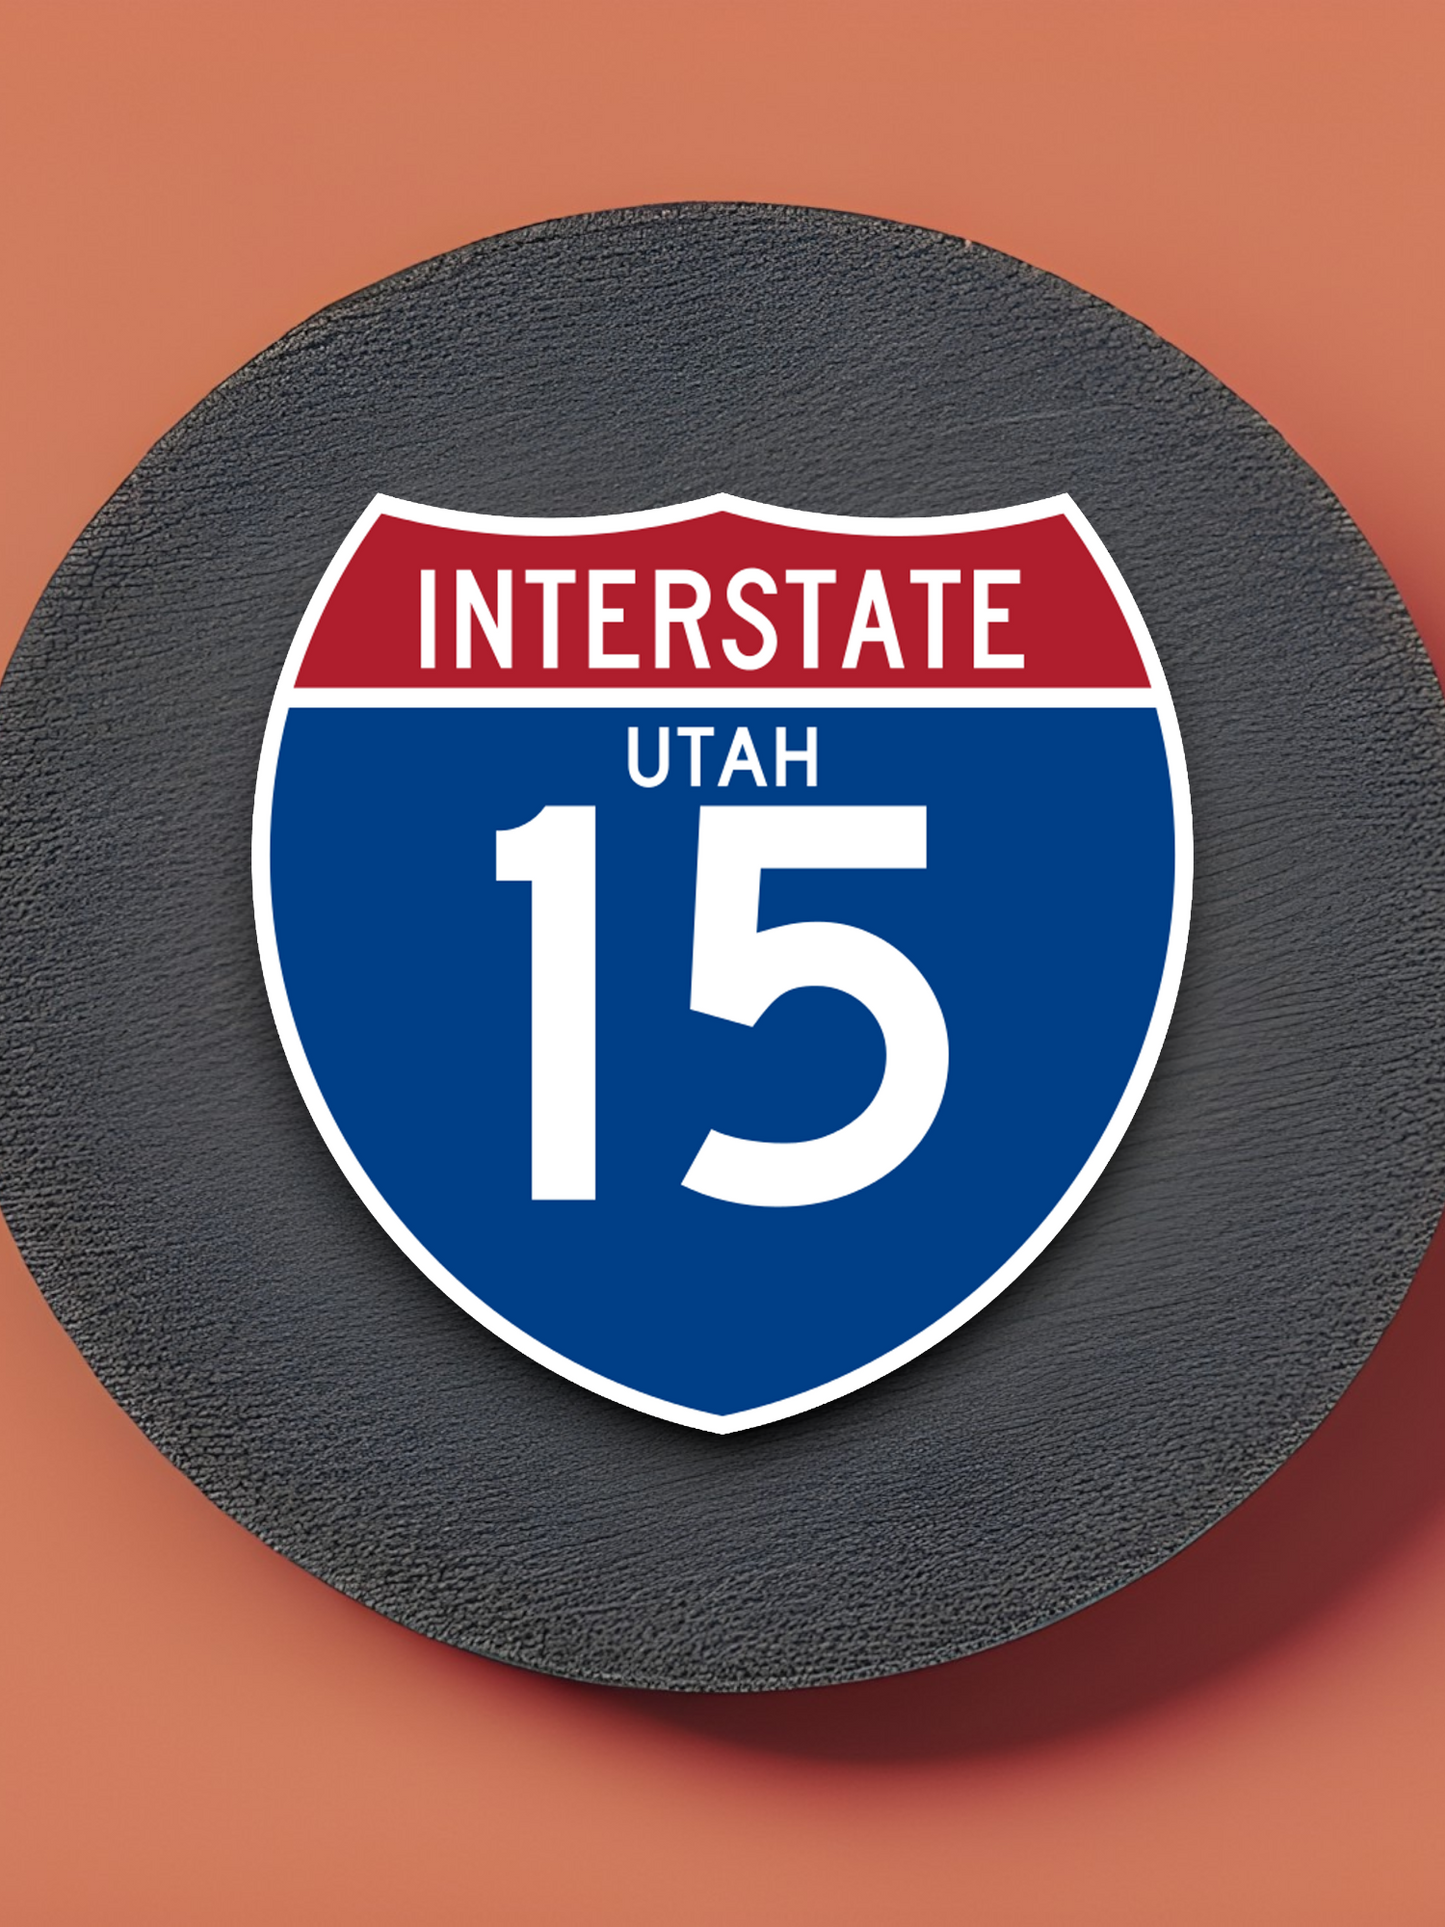 Interstate I-15 Utah - Road Sign Sticker